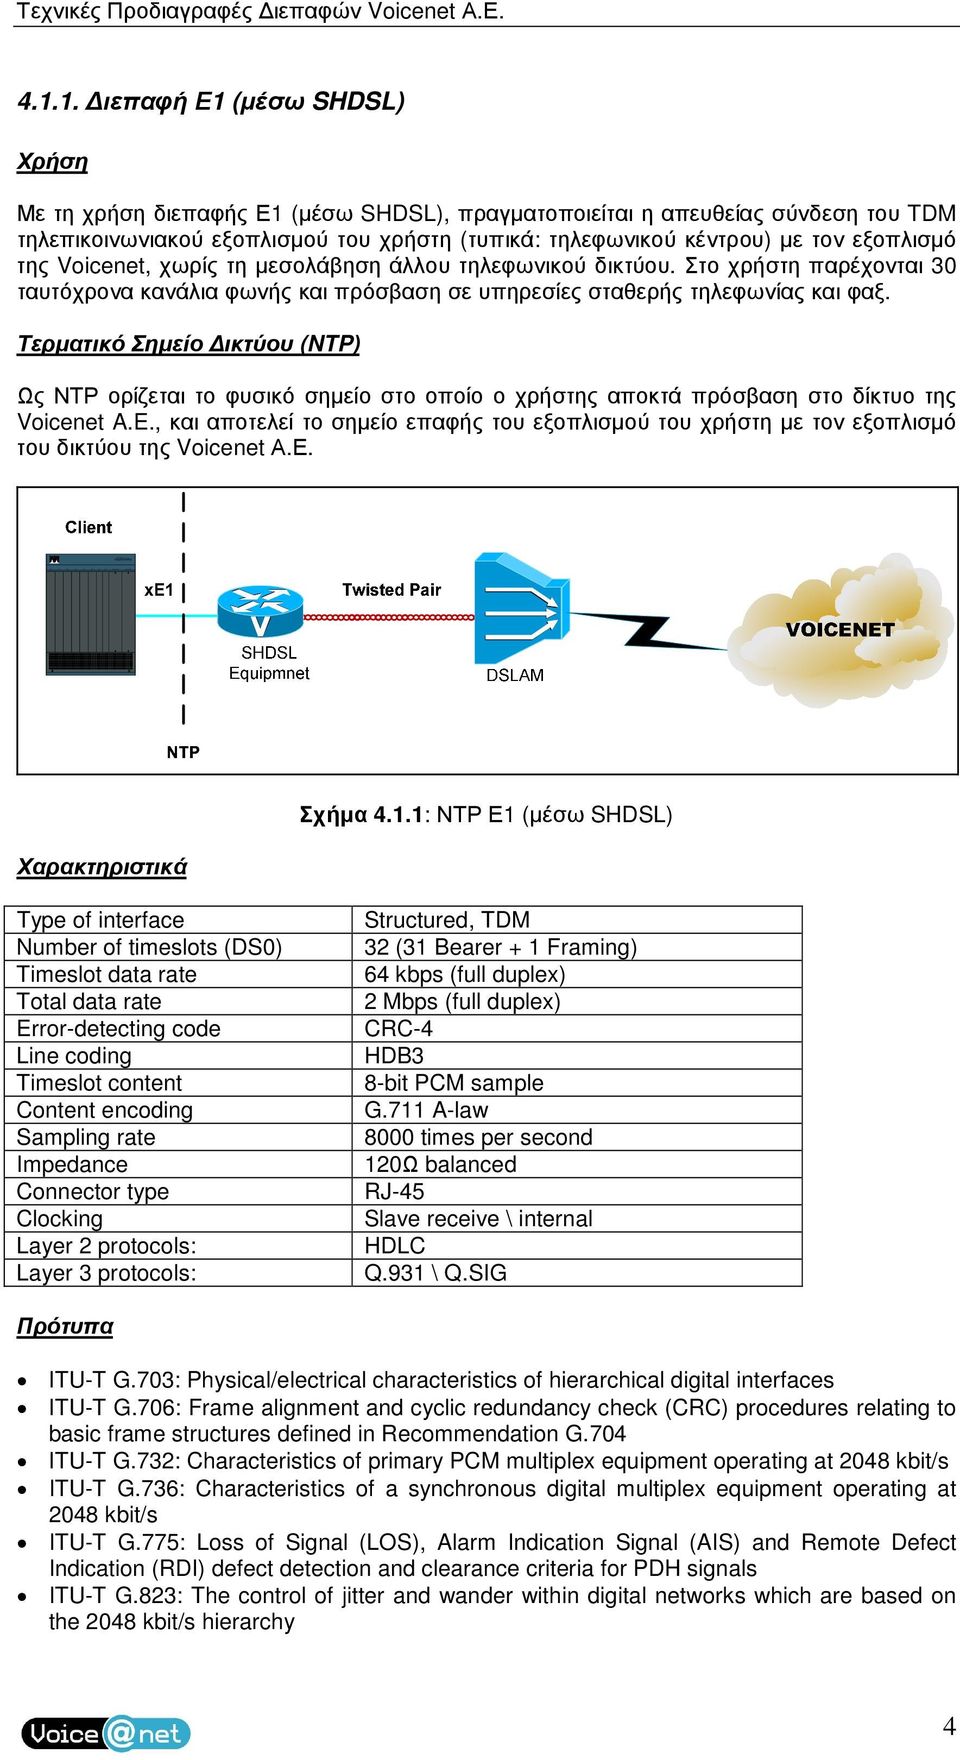 POW ER SUPPL Y 2 Τεχνικές Προδιαγραφές ιεπαφών Voicenet Α.Ε. 4.1.